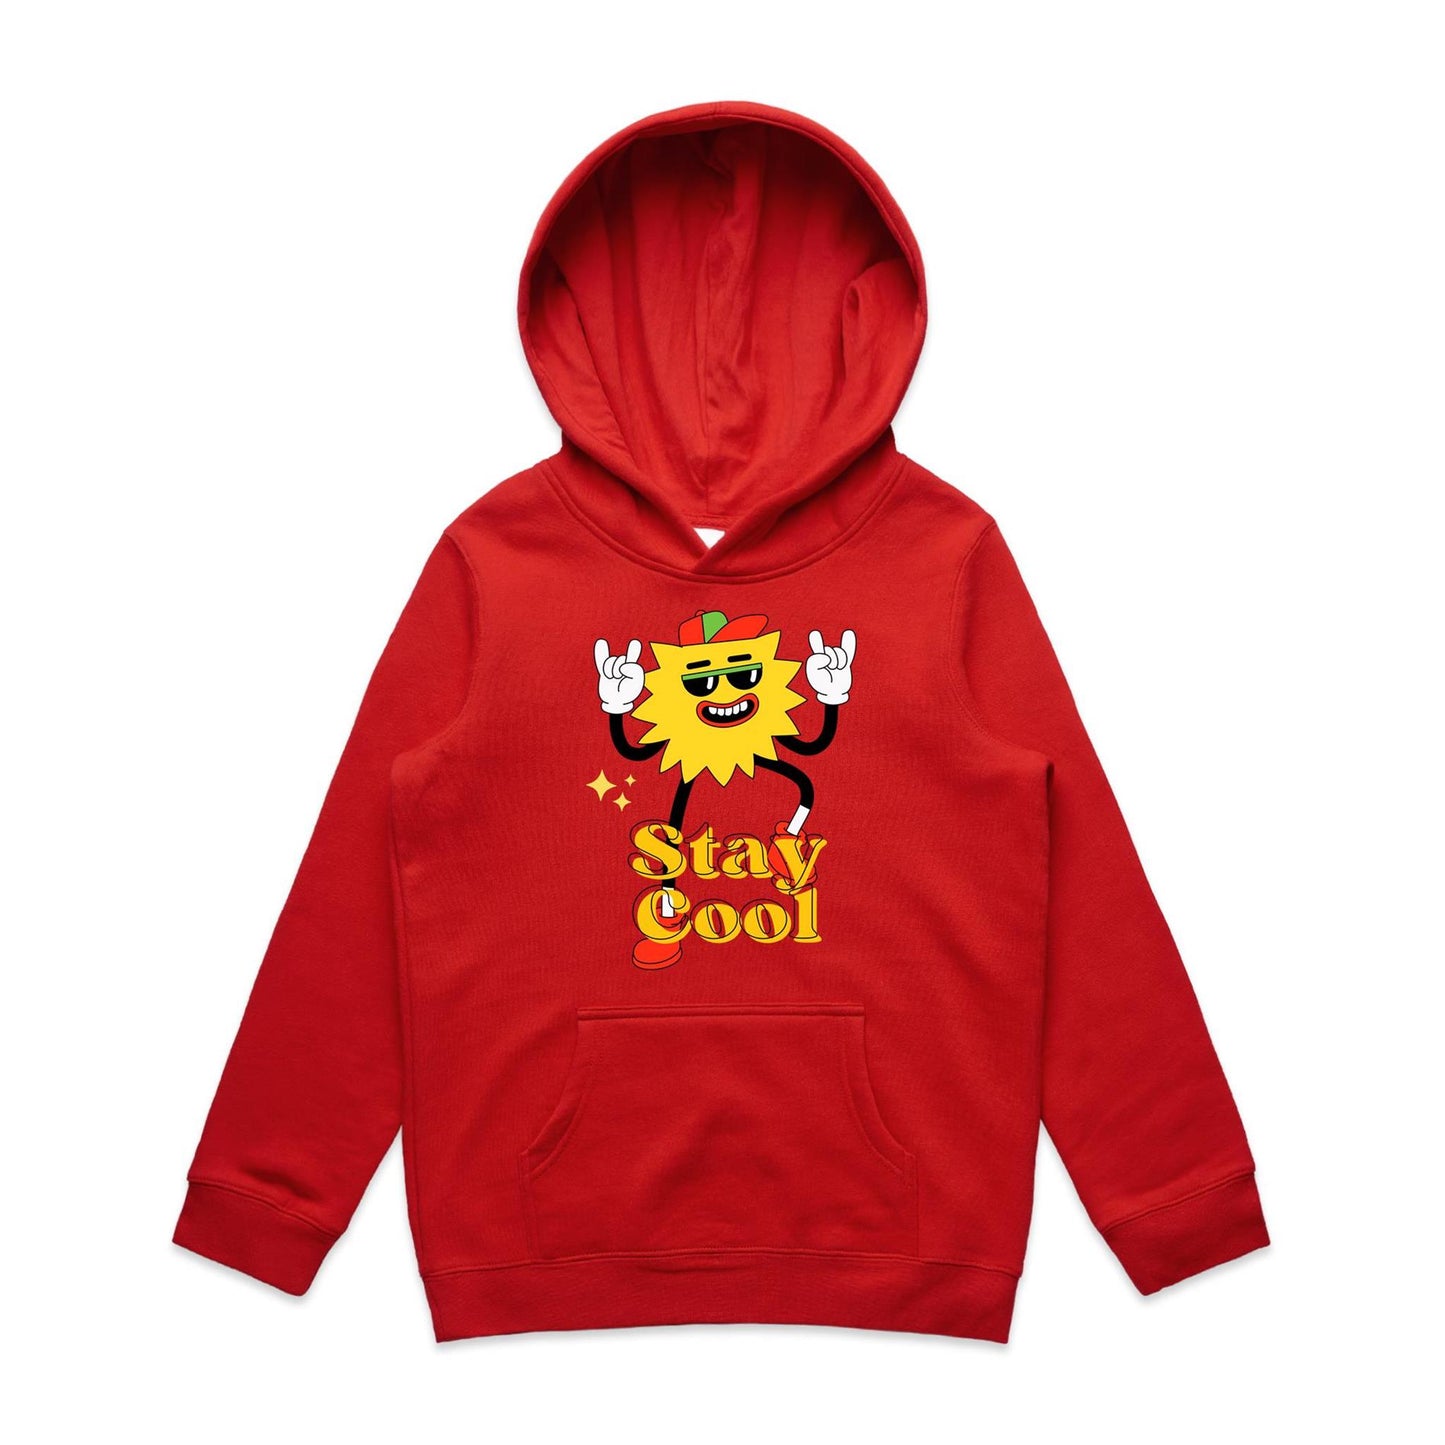 Stay Cool - Youth Supply Hood Red Kids Hoodie